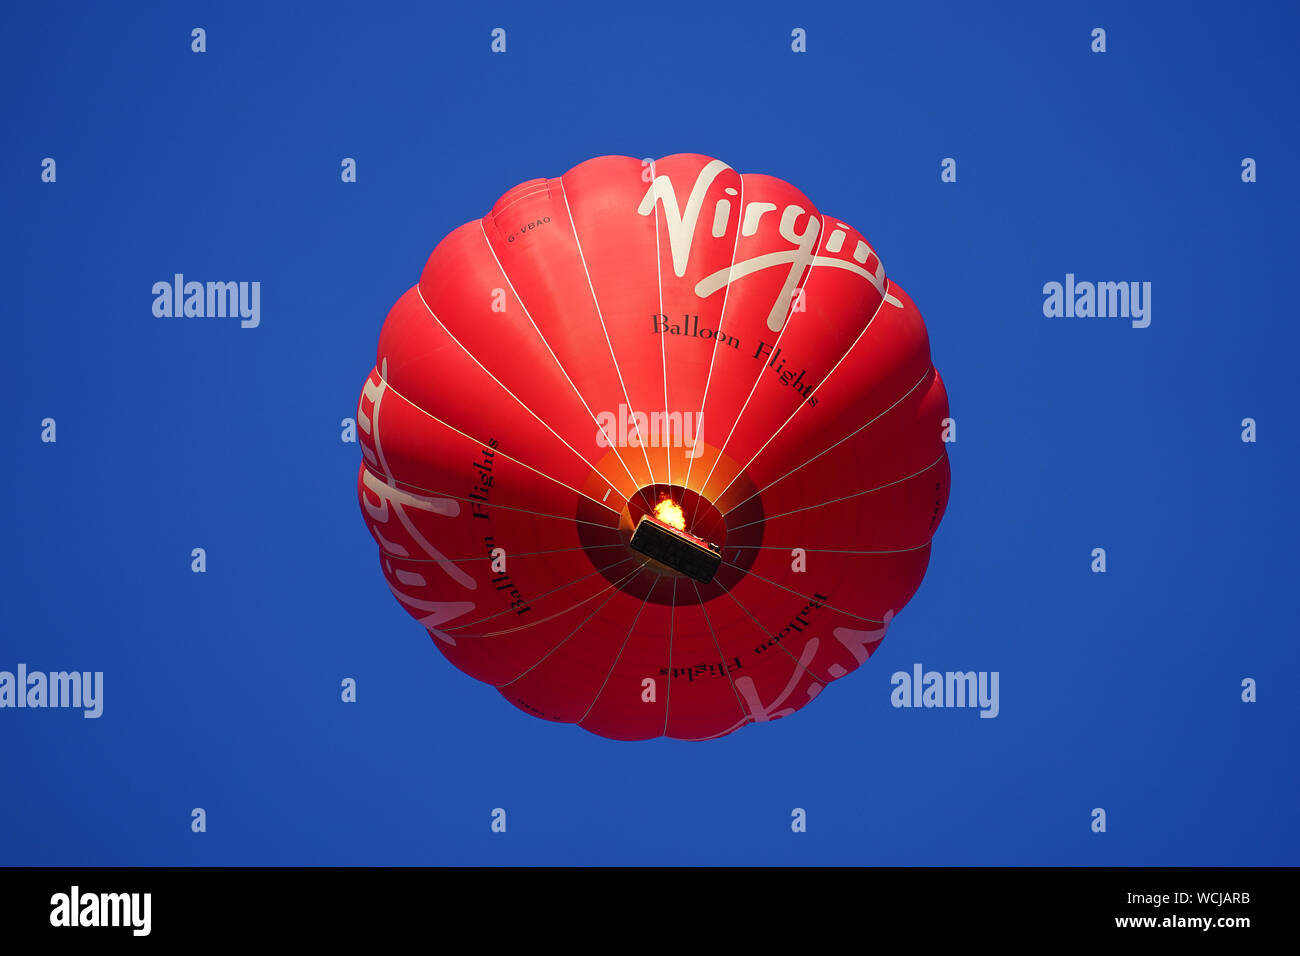 The Virgin hot air balloon overhead Stock Photo